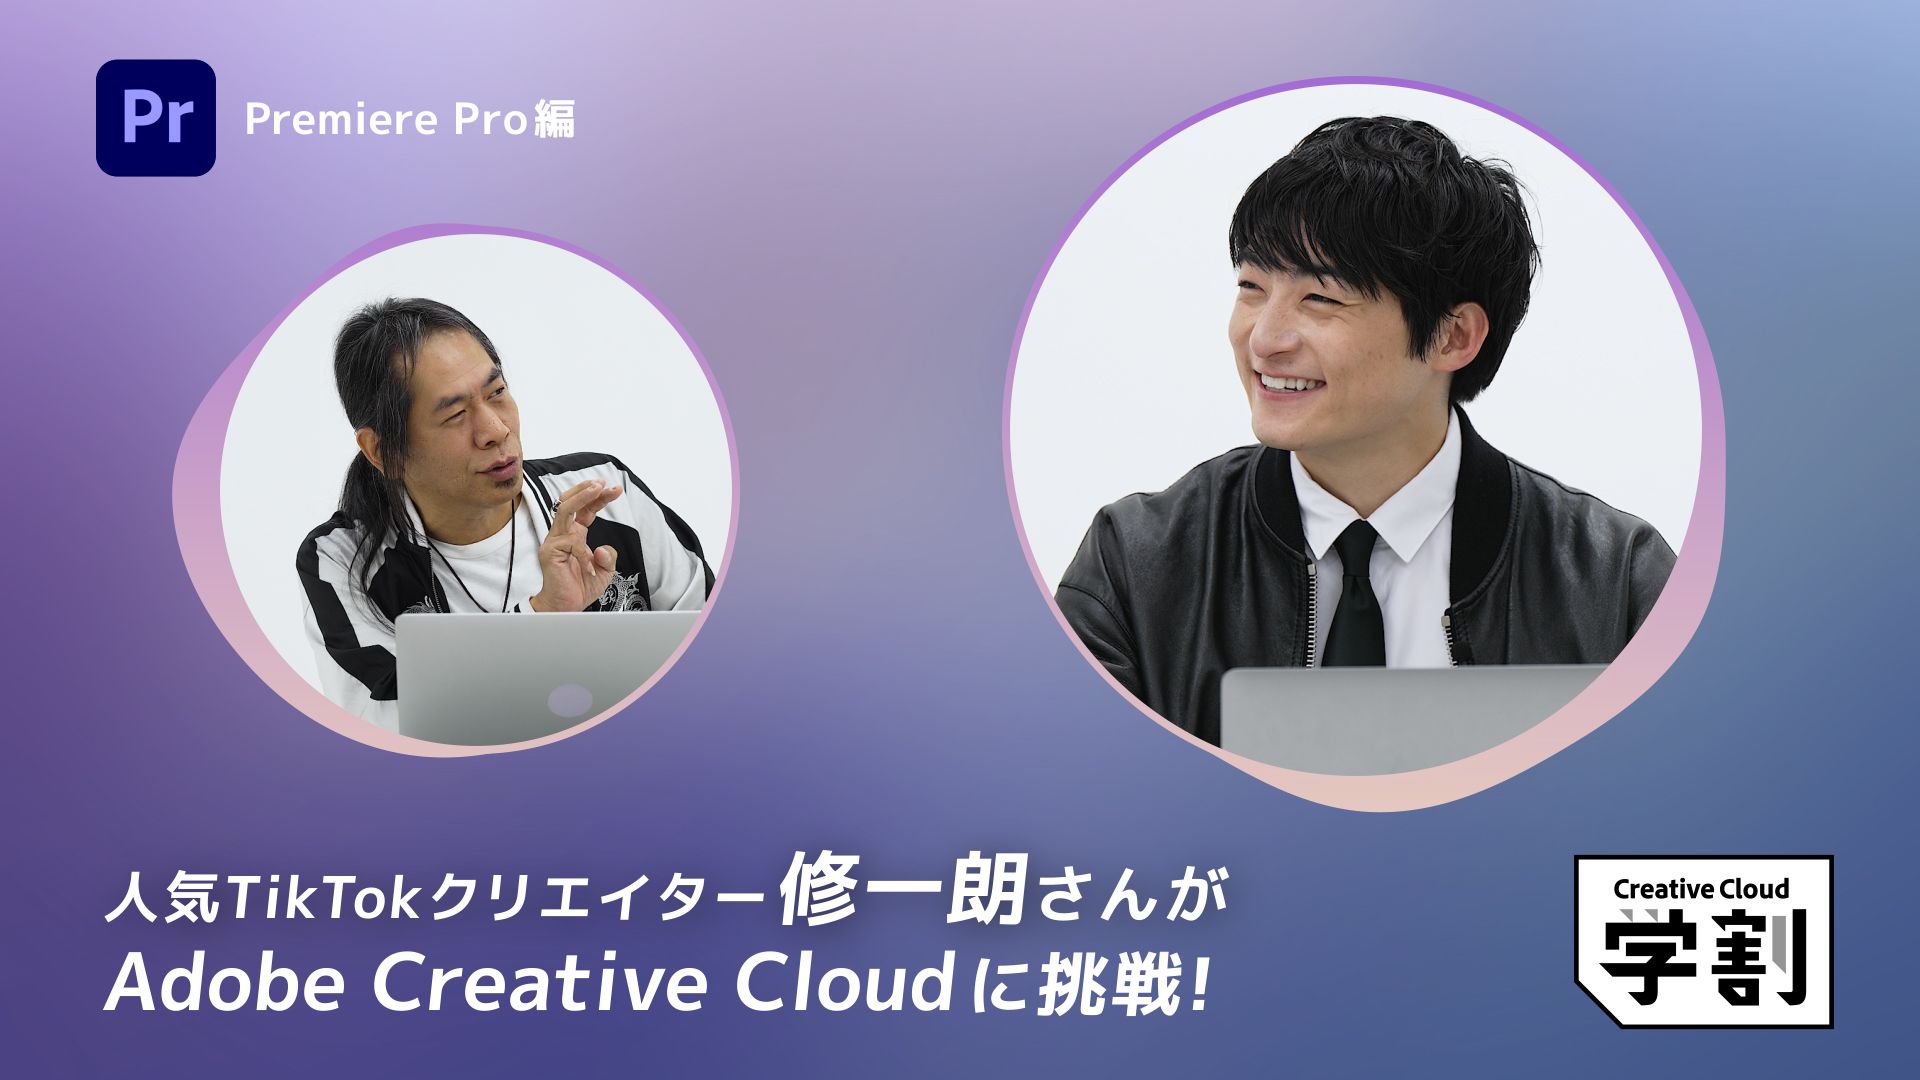 『Adobe Creative Cloud』学生向けキャンペーン